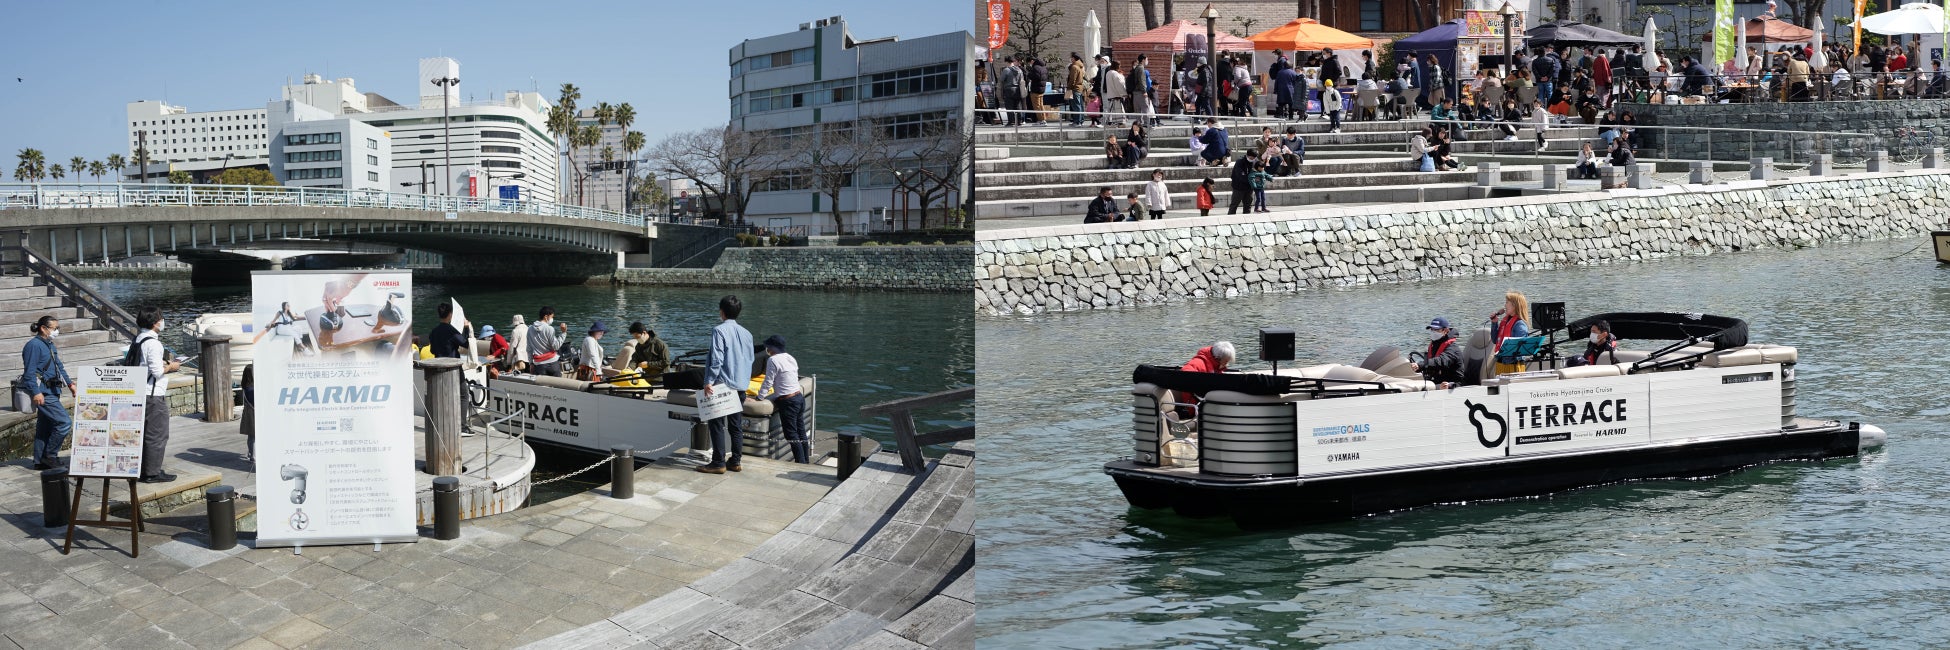 GK京都、徳島市やヤマハ発動機と協働で水上モビリティを活用した実証実験を企画デザインのサブ画像2_左：カフェイベントと同時開催した試乗会　　右：試験艇の静寂性を生かした水上ジャズライブ